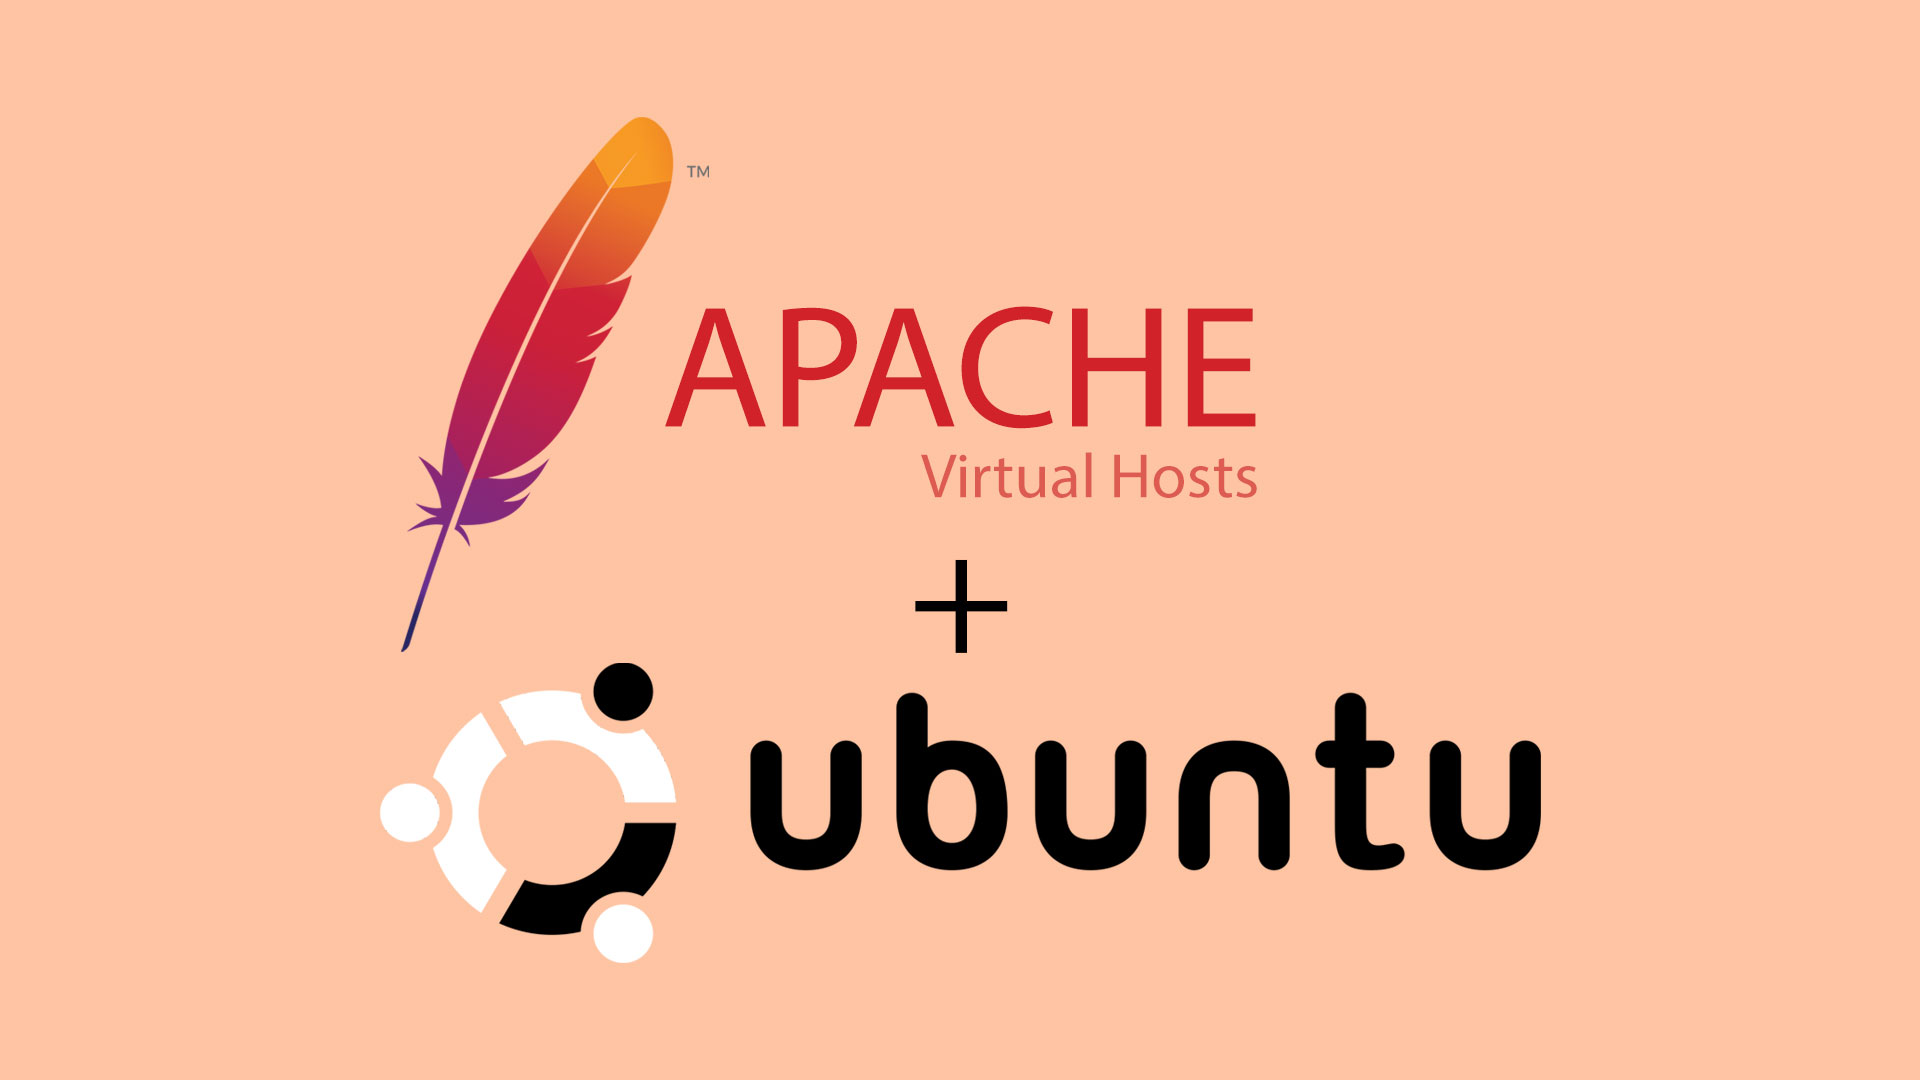 How To Set Up Apache2 Virtual Hosts on Ubuntu 16.04 / 18.04 / 18.10